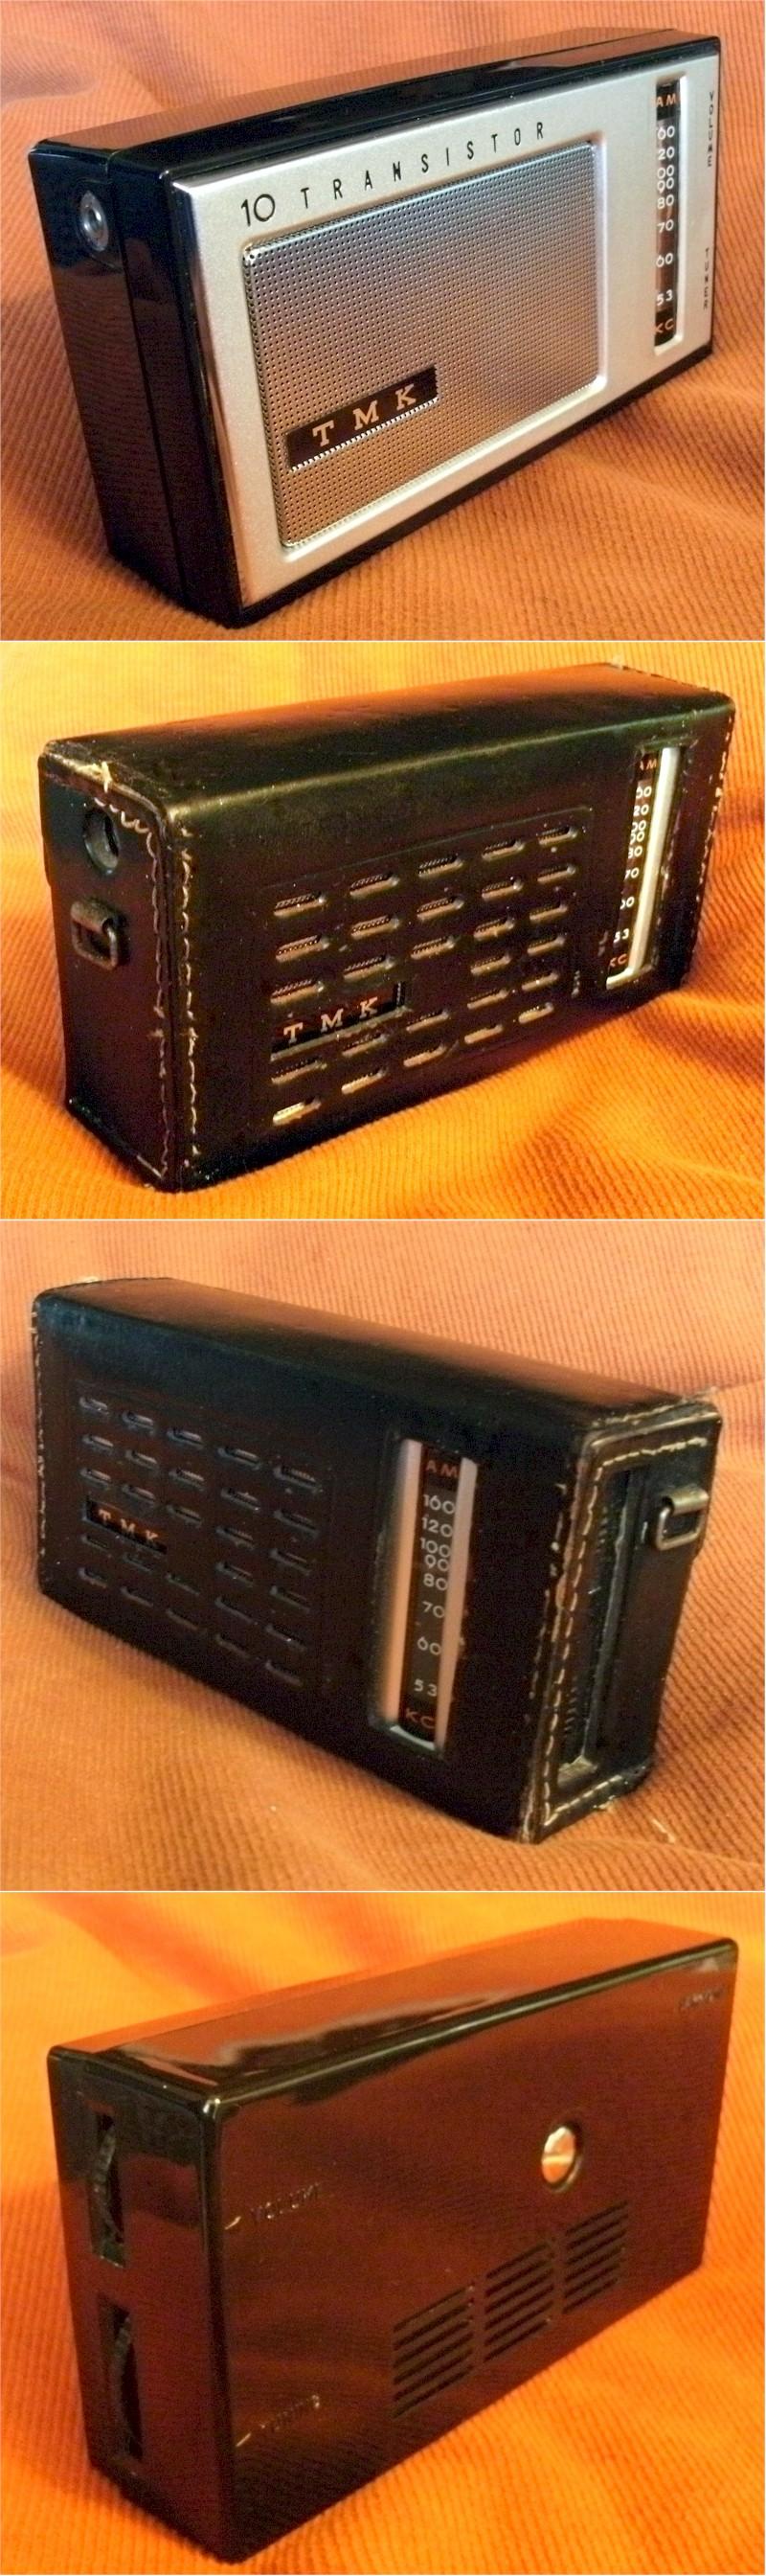 TMK 10-Transistor Portable (early 60s)